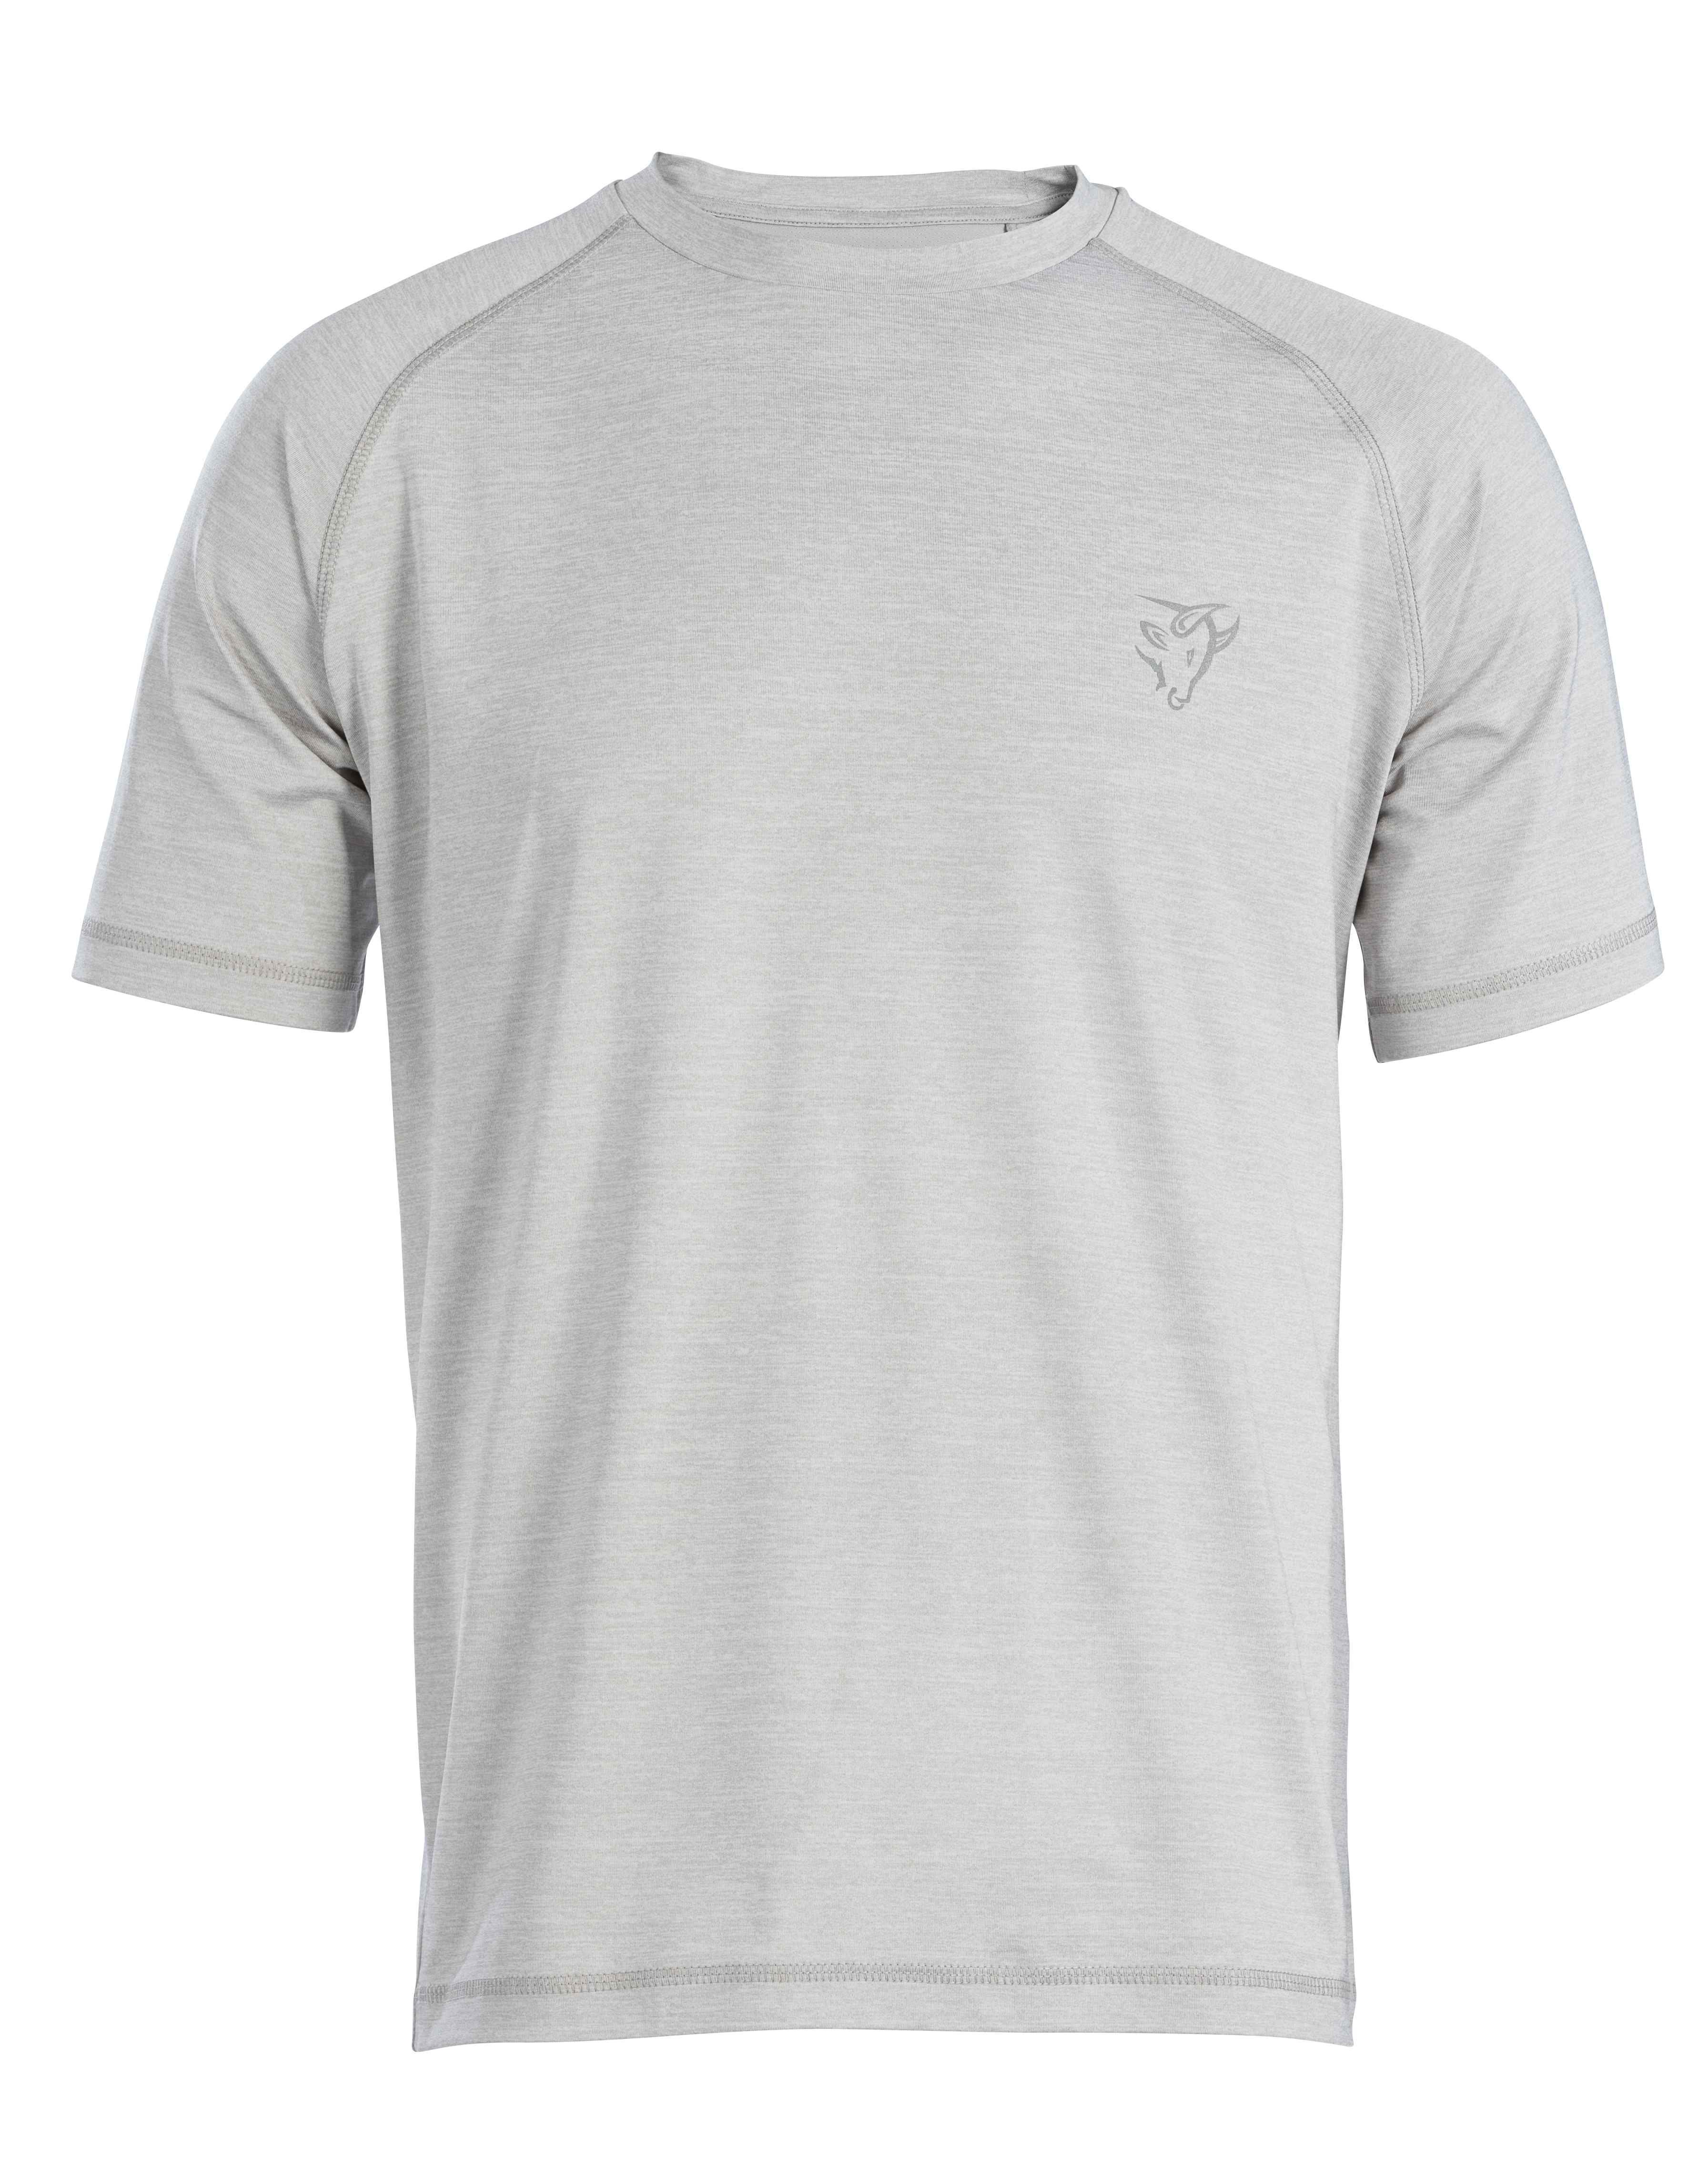 OX Tech Crew T-Shirt Grey - S